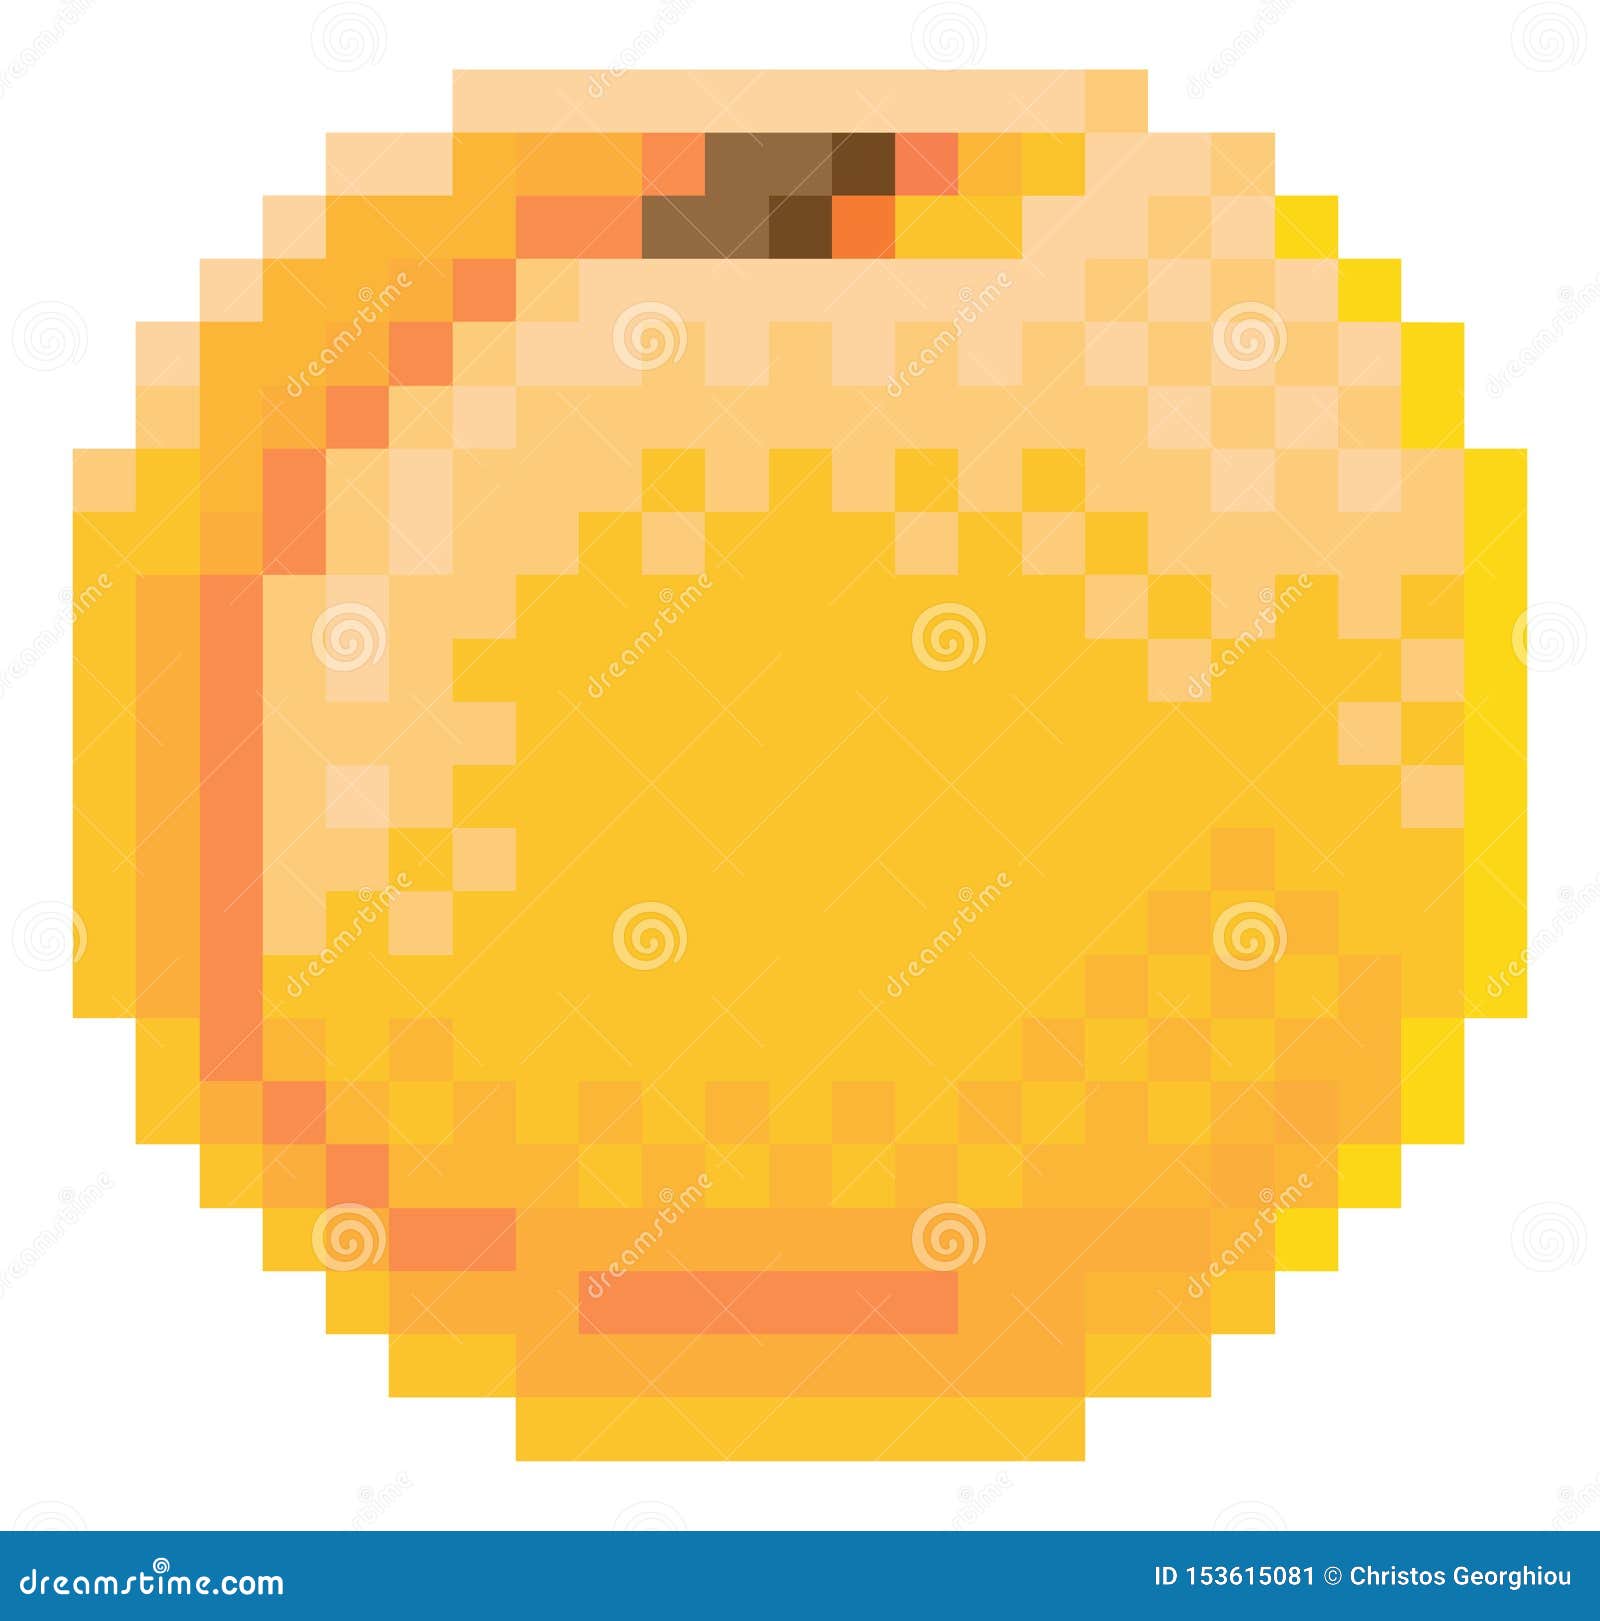 Peach Pixel Art 8 Bit Video Game Fruit Icon Stock Vector - Illustration